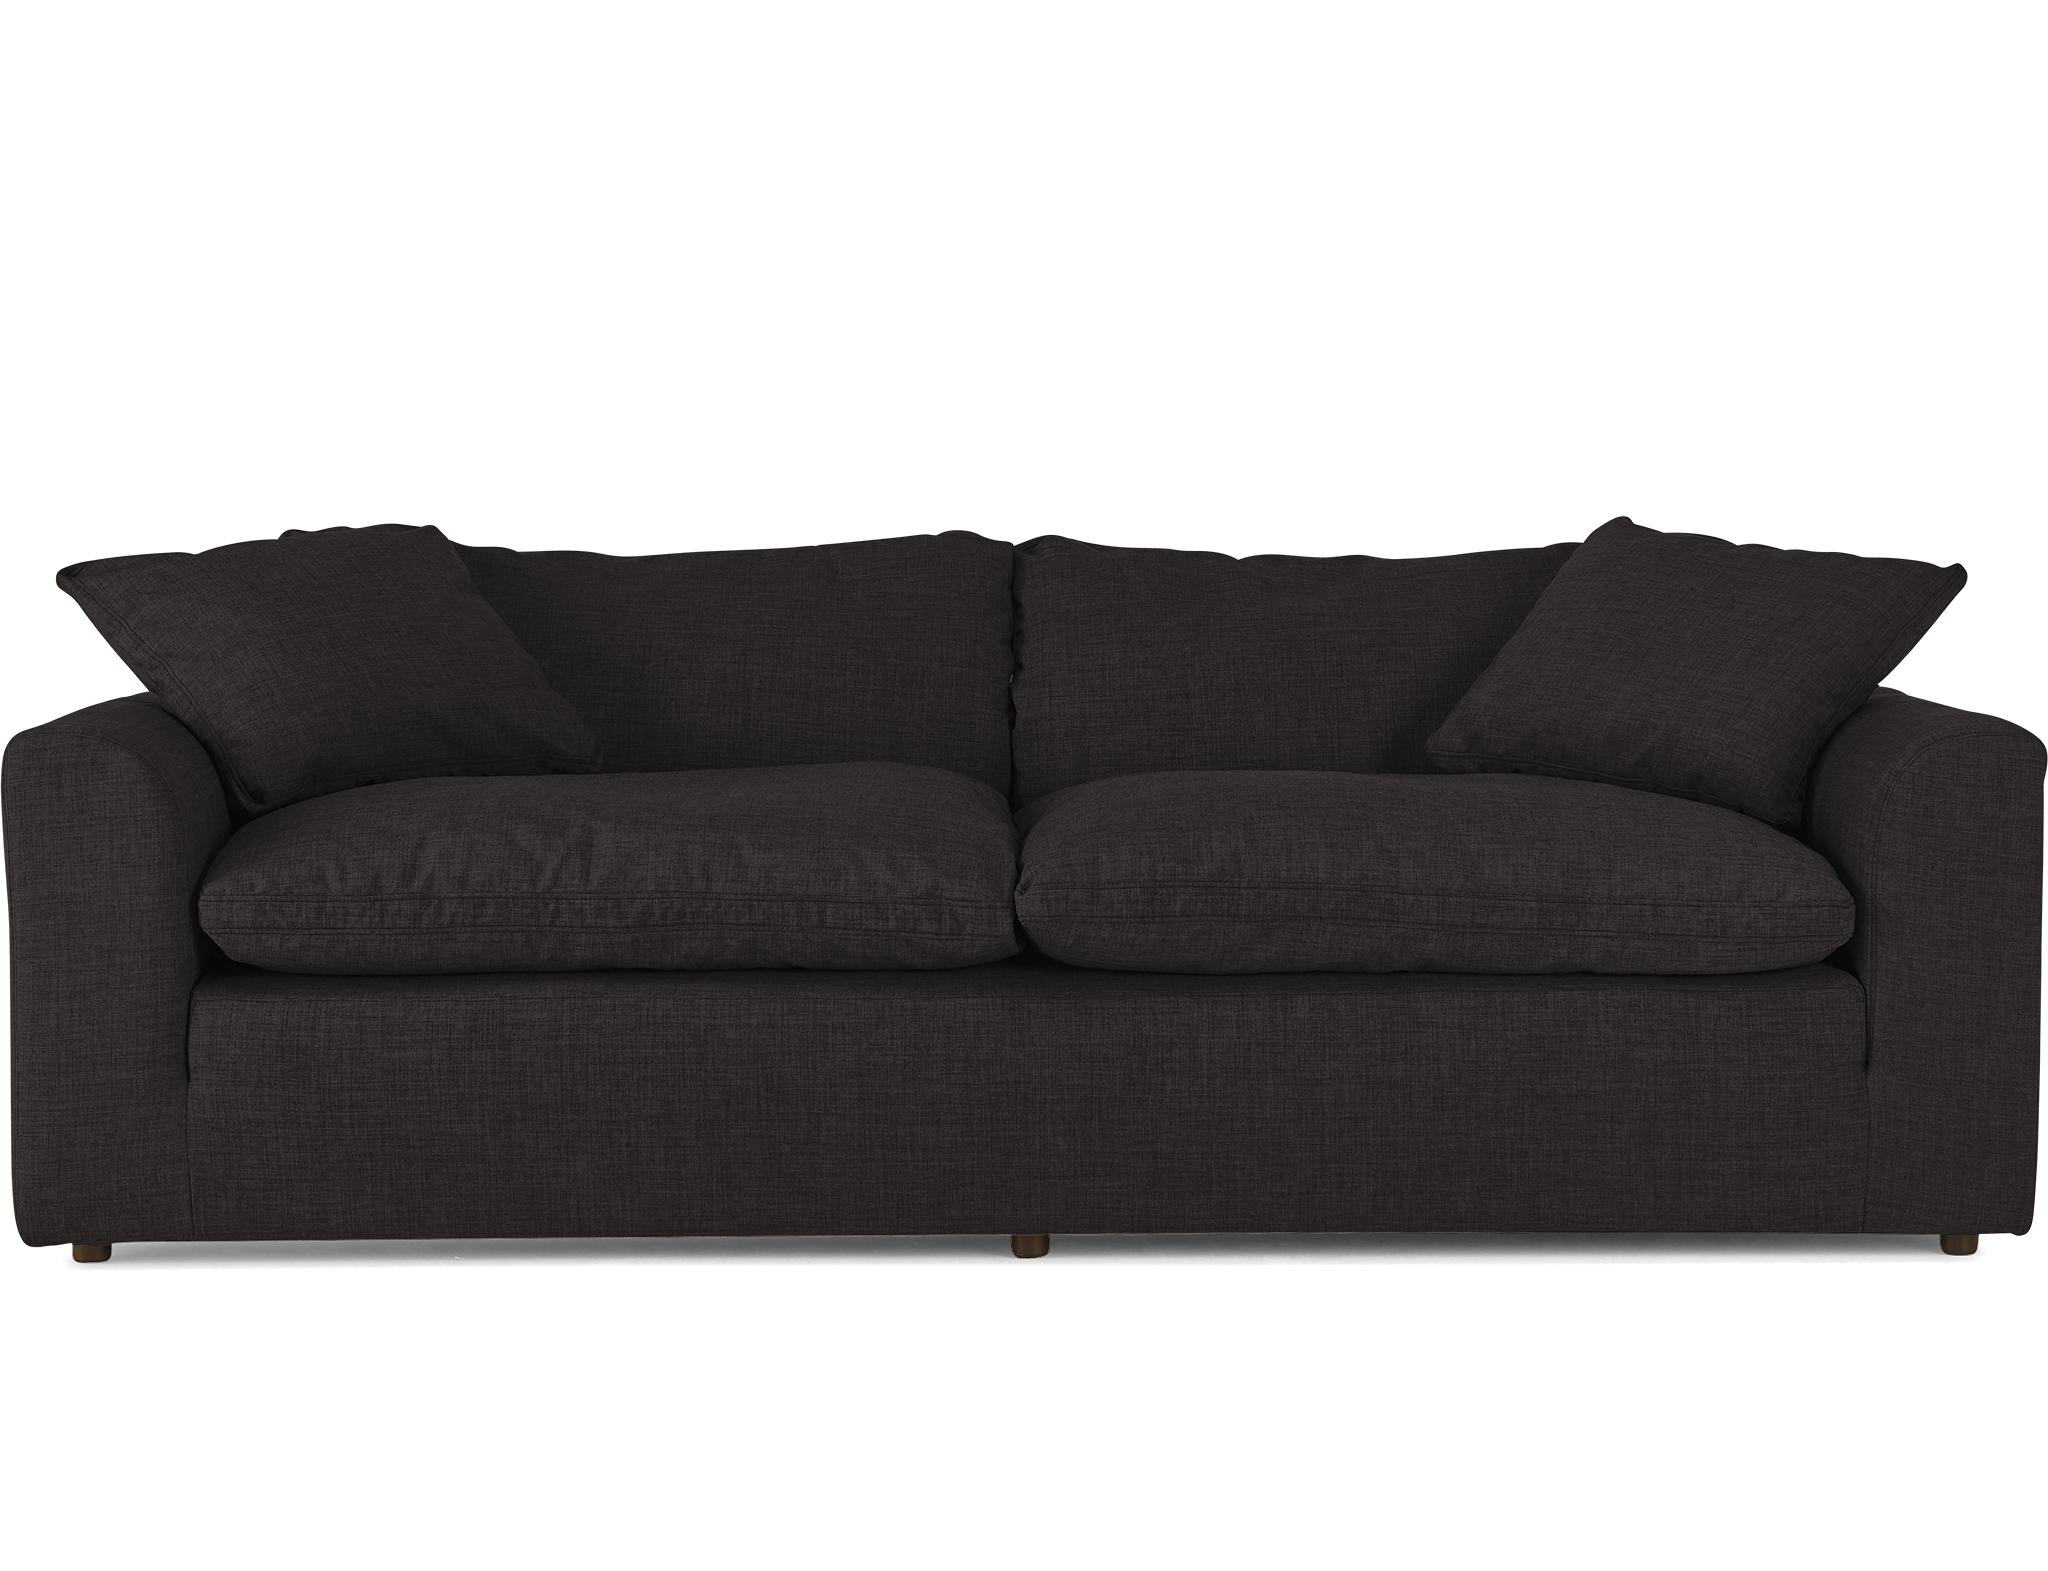 Gray Bryant Mid Century Modern Sofa - Cordova Eclipse - Image 0